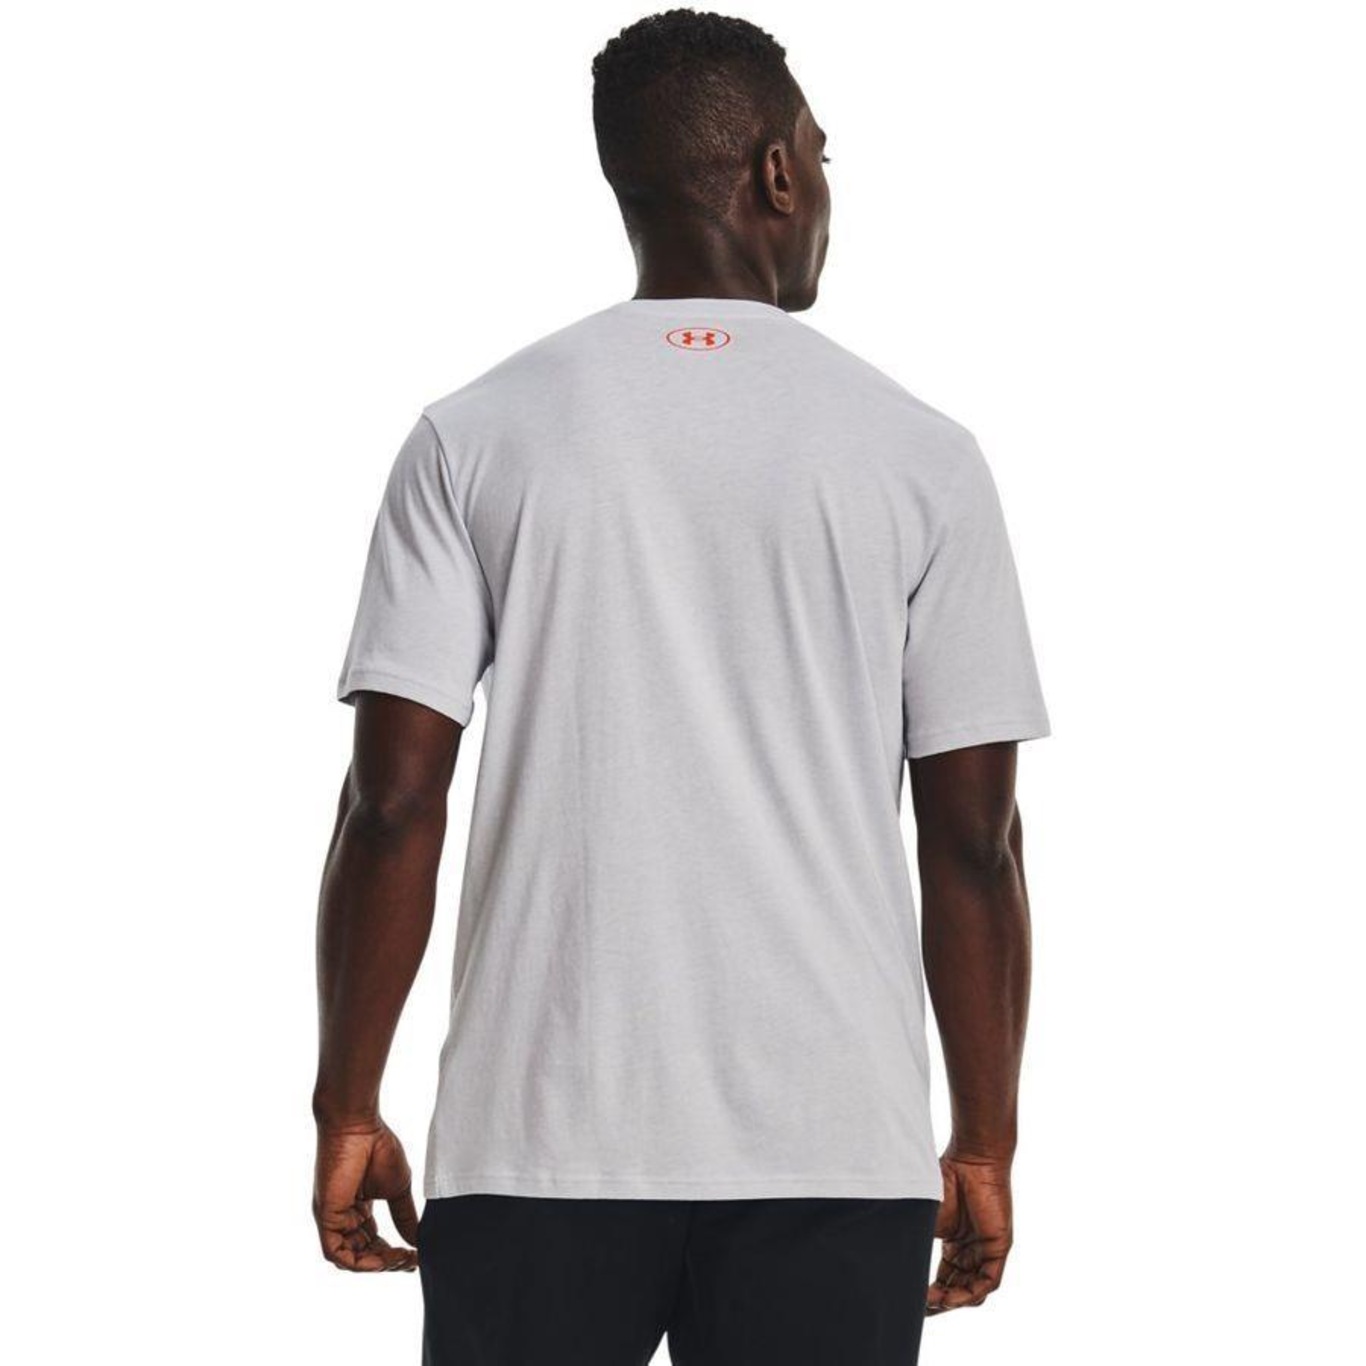 Camiseta Under Armour Big Logo Masculina - Preto+Branco